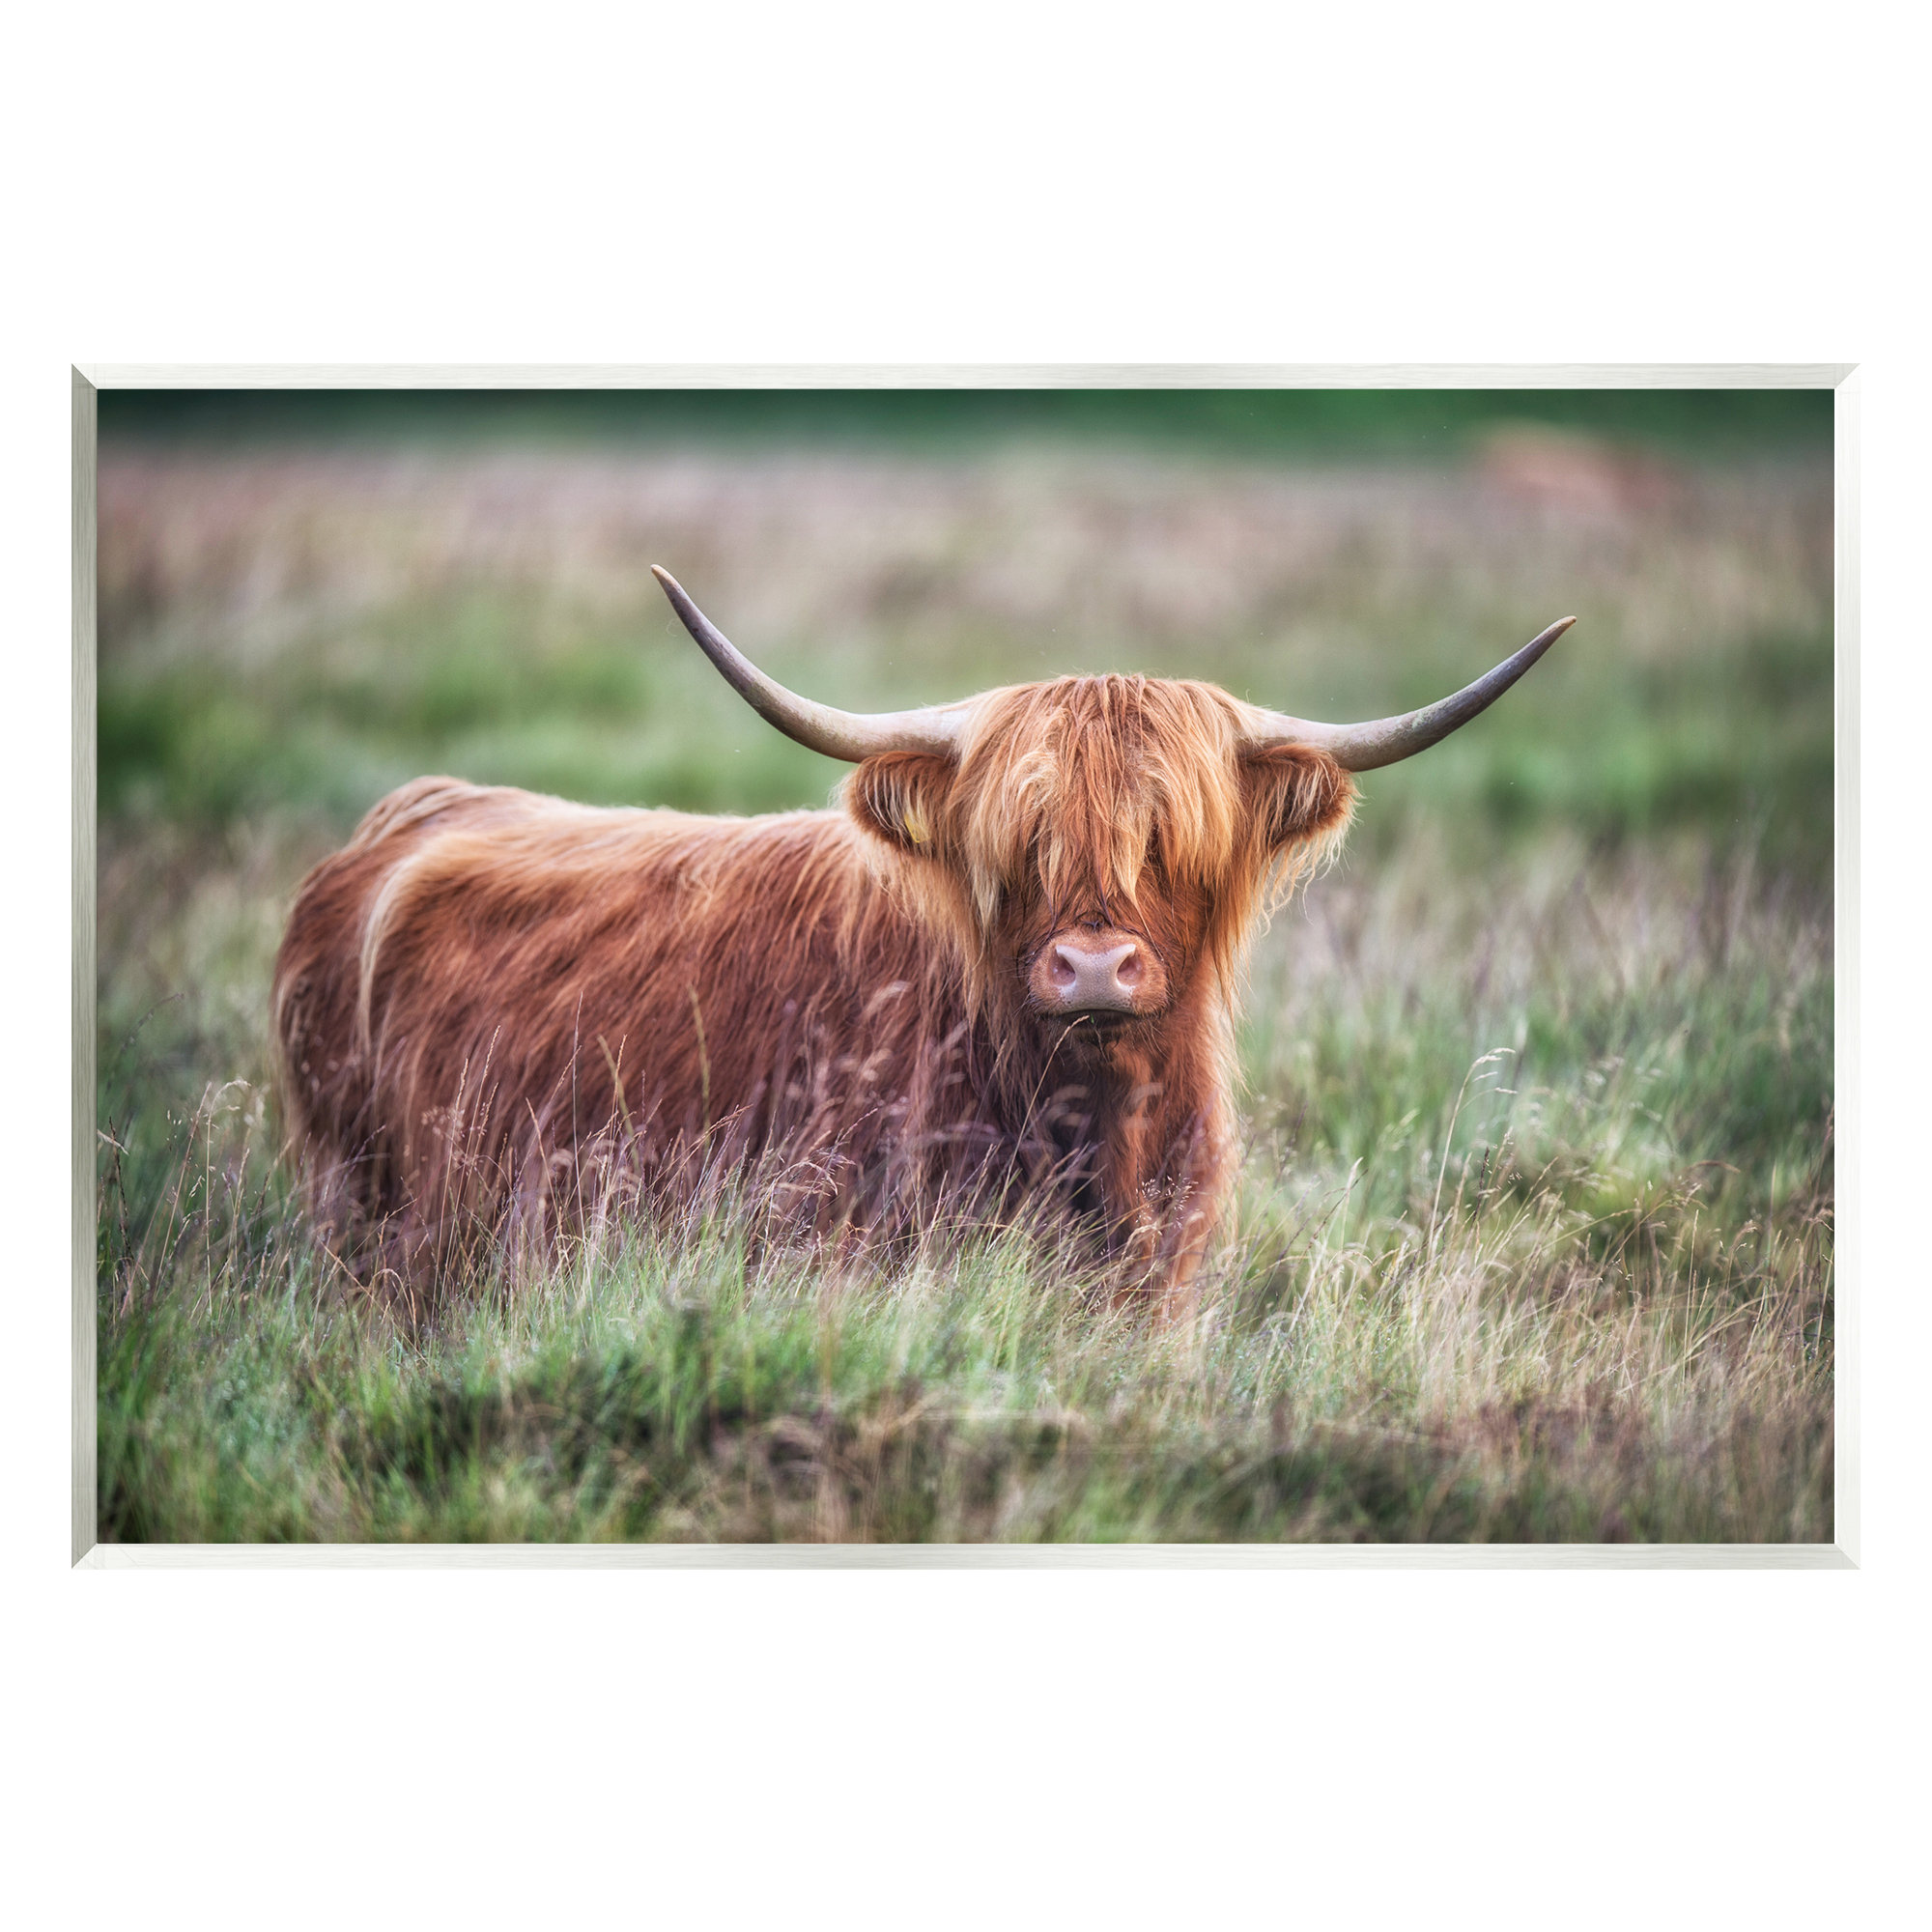 Highland Cattle  Scottish highland cow, Highland cattle, Longhorn